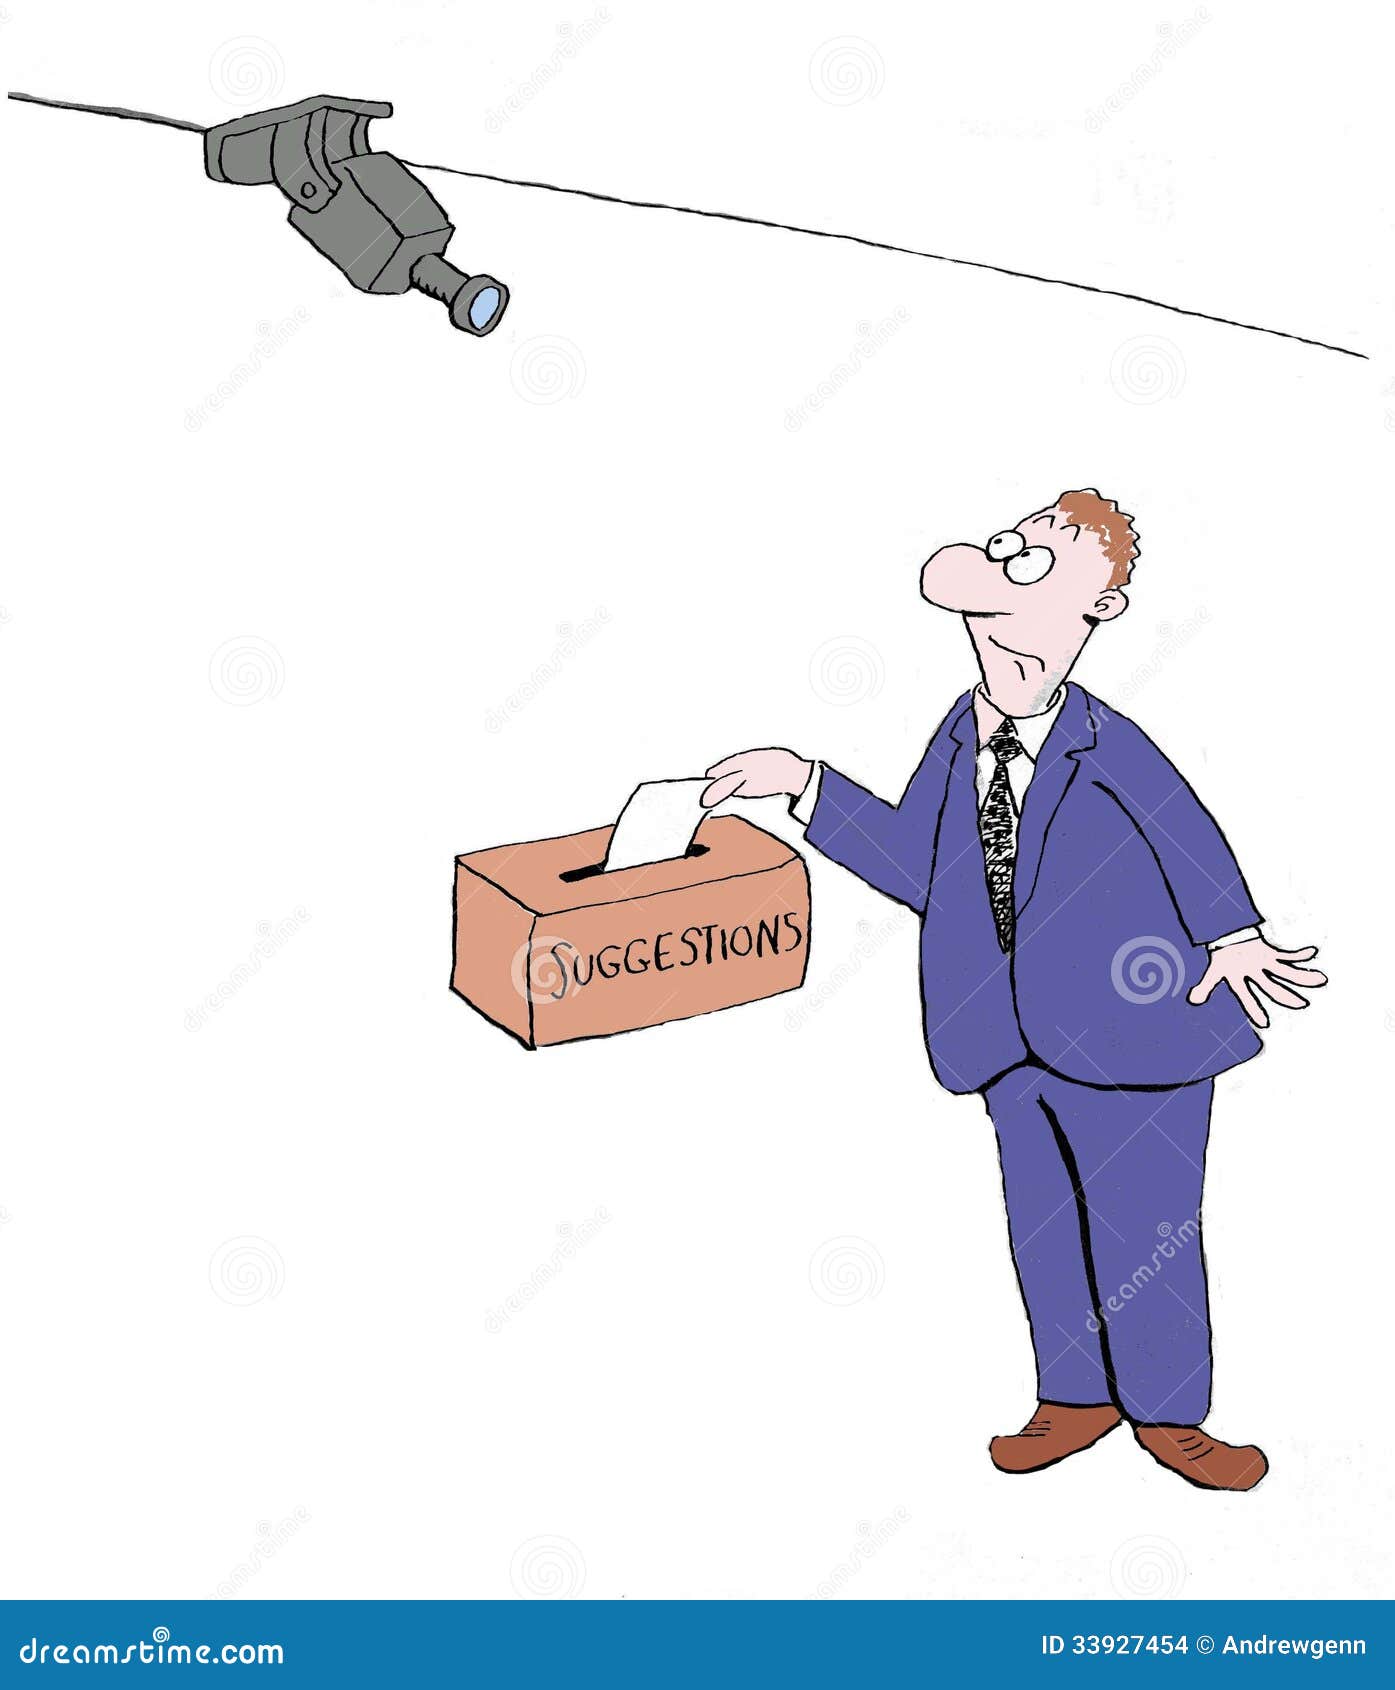 Suggestion Box stock illustration. Illustration of cartoon - 33927454